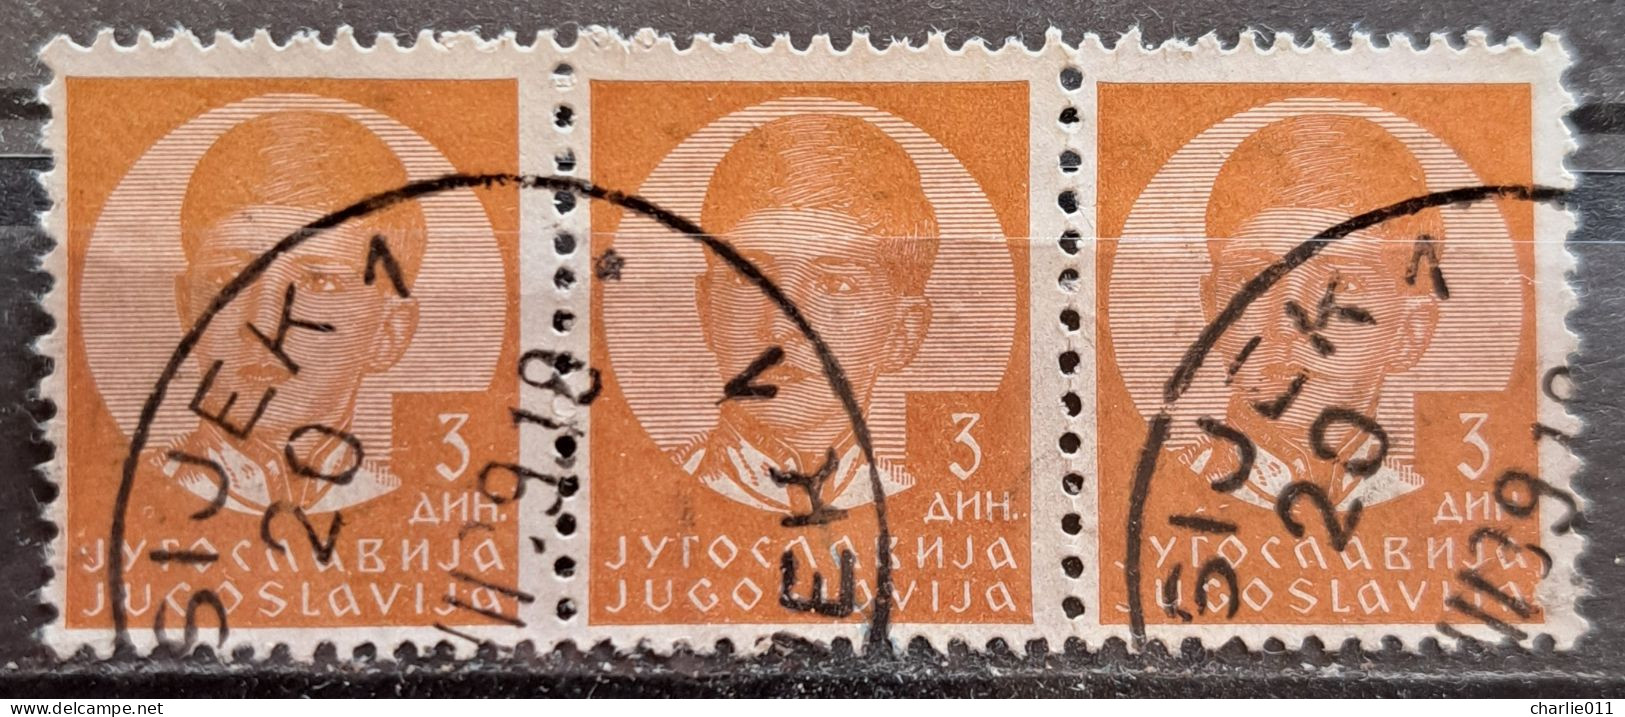 KING PETER II-3 DIN.-3 IN RAW-POSTMARK OSIJEK-ERROR-CROATIA-YUGOSLAVIA-1939 - Usados